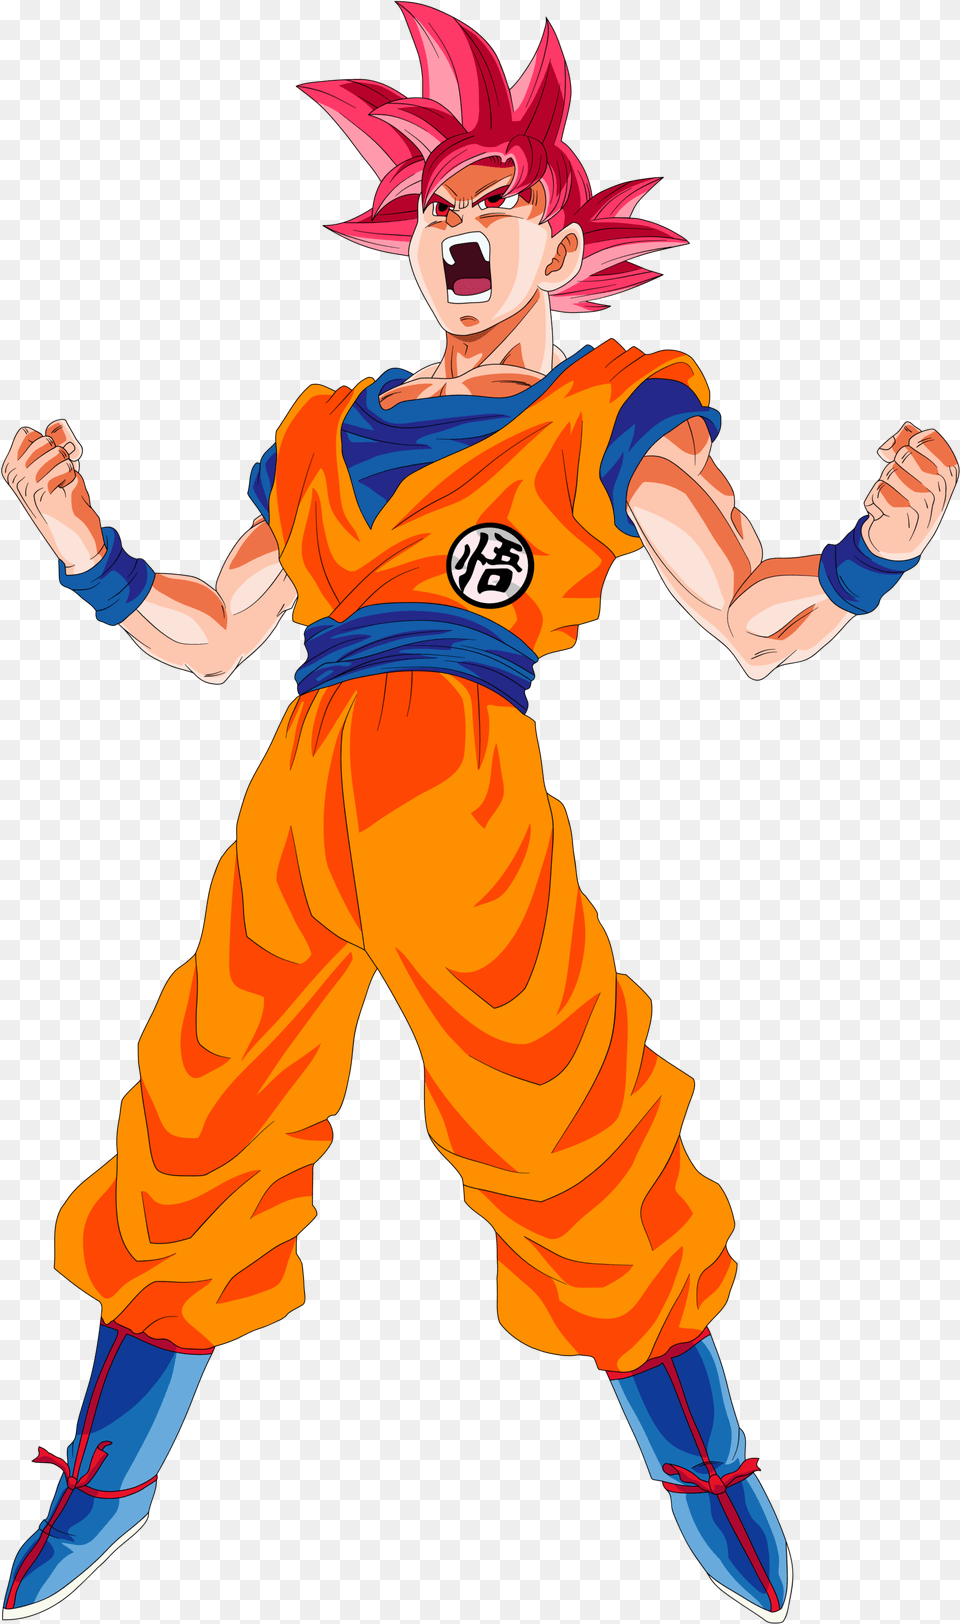 Goku Super Saiyan God Power Up Palette 1 By Eymsmiley D92yoor Goku Ssj God, Book, Clothing, Comics, Costume Png Image